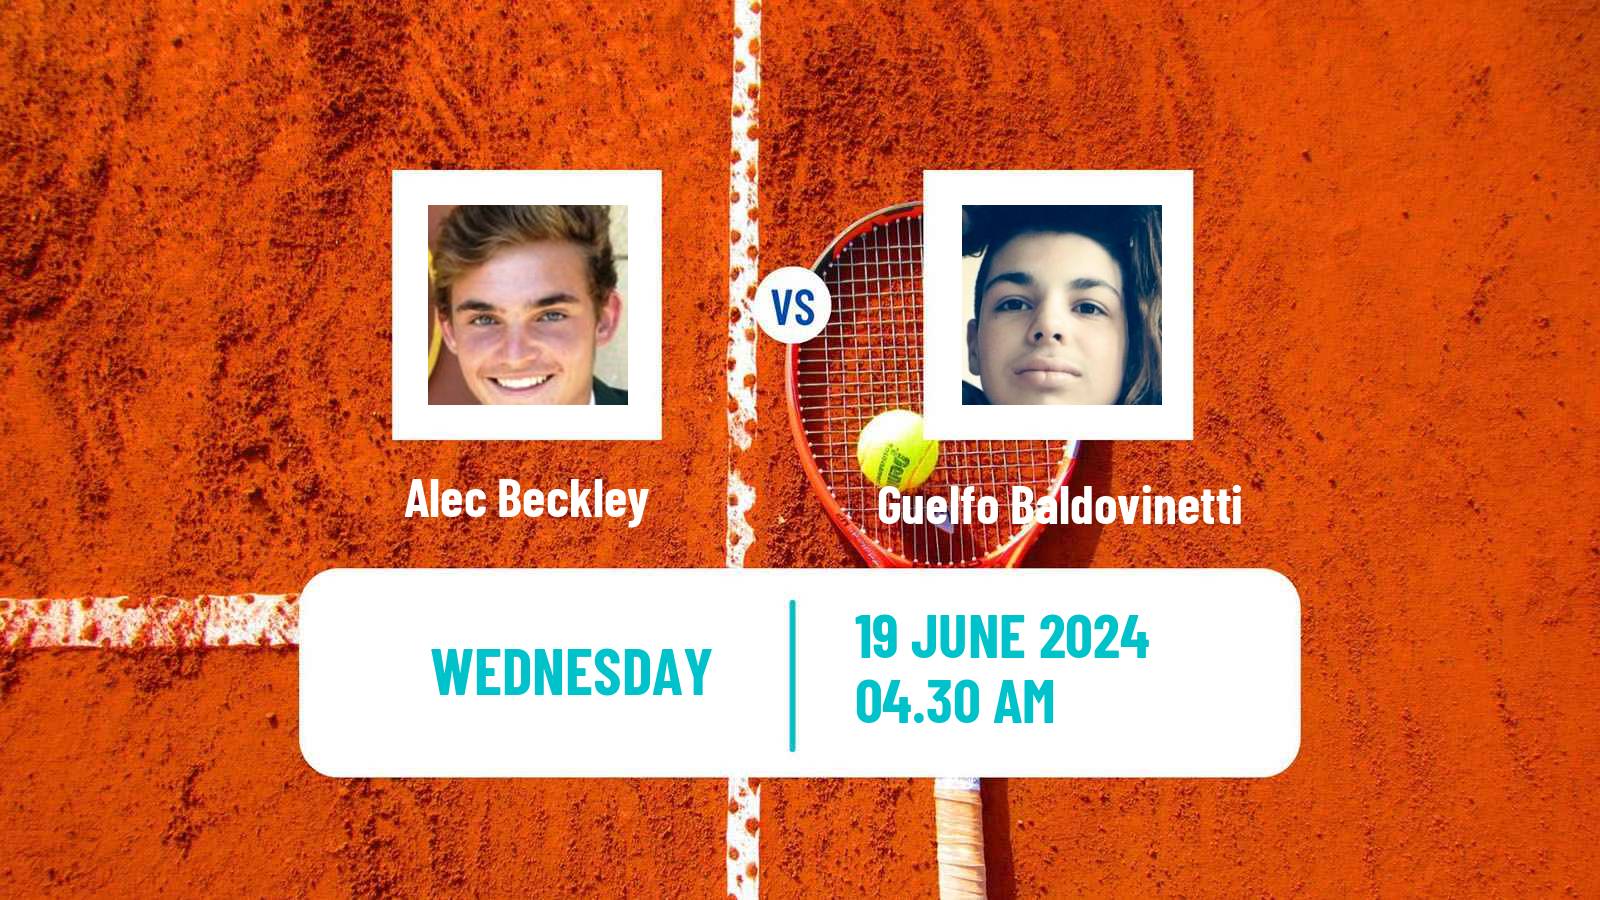 Tennis ITF M15 Hillcrest Men Alec Beckley - Guelfo Baldovinetti